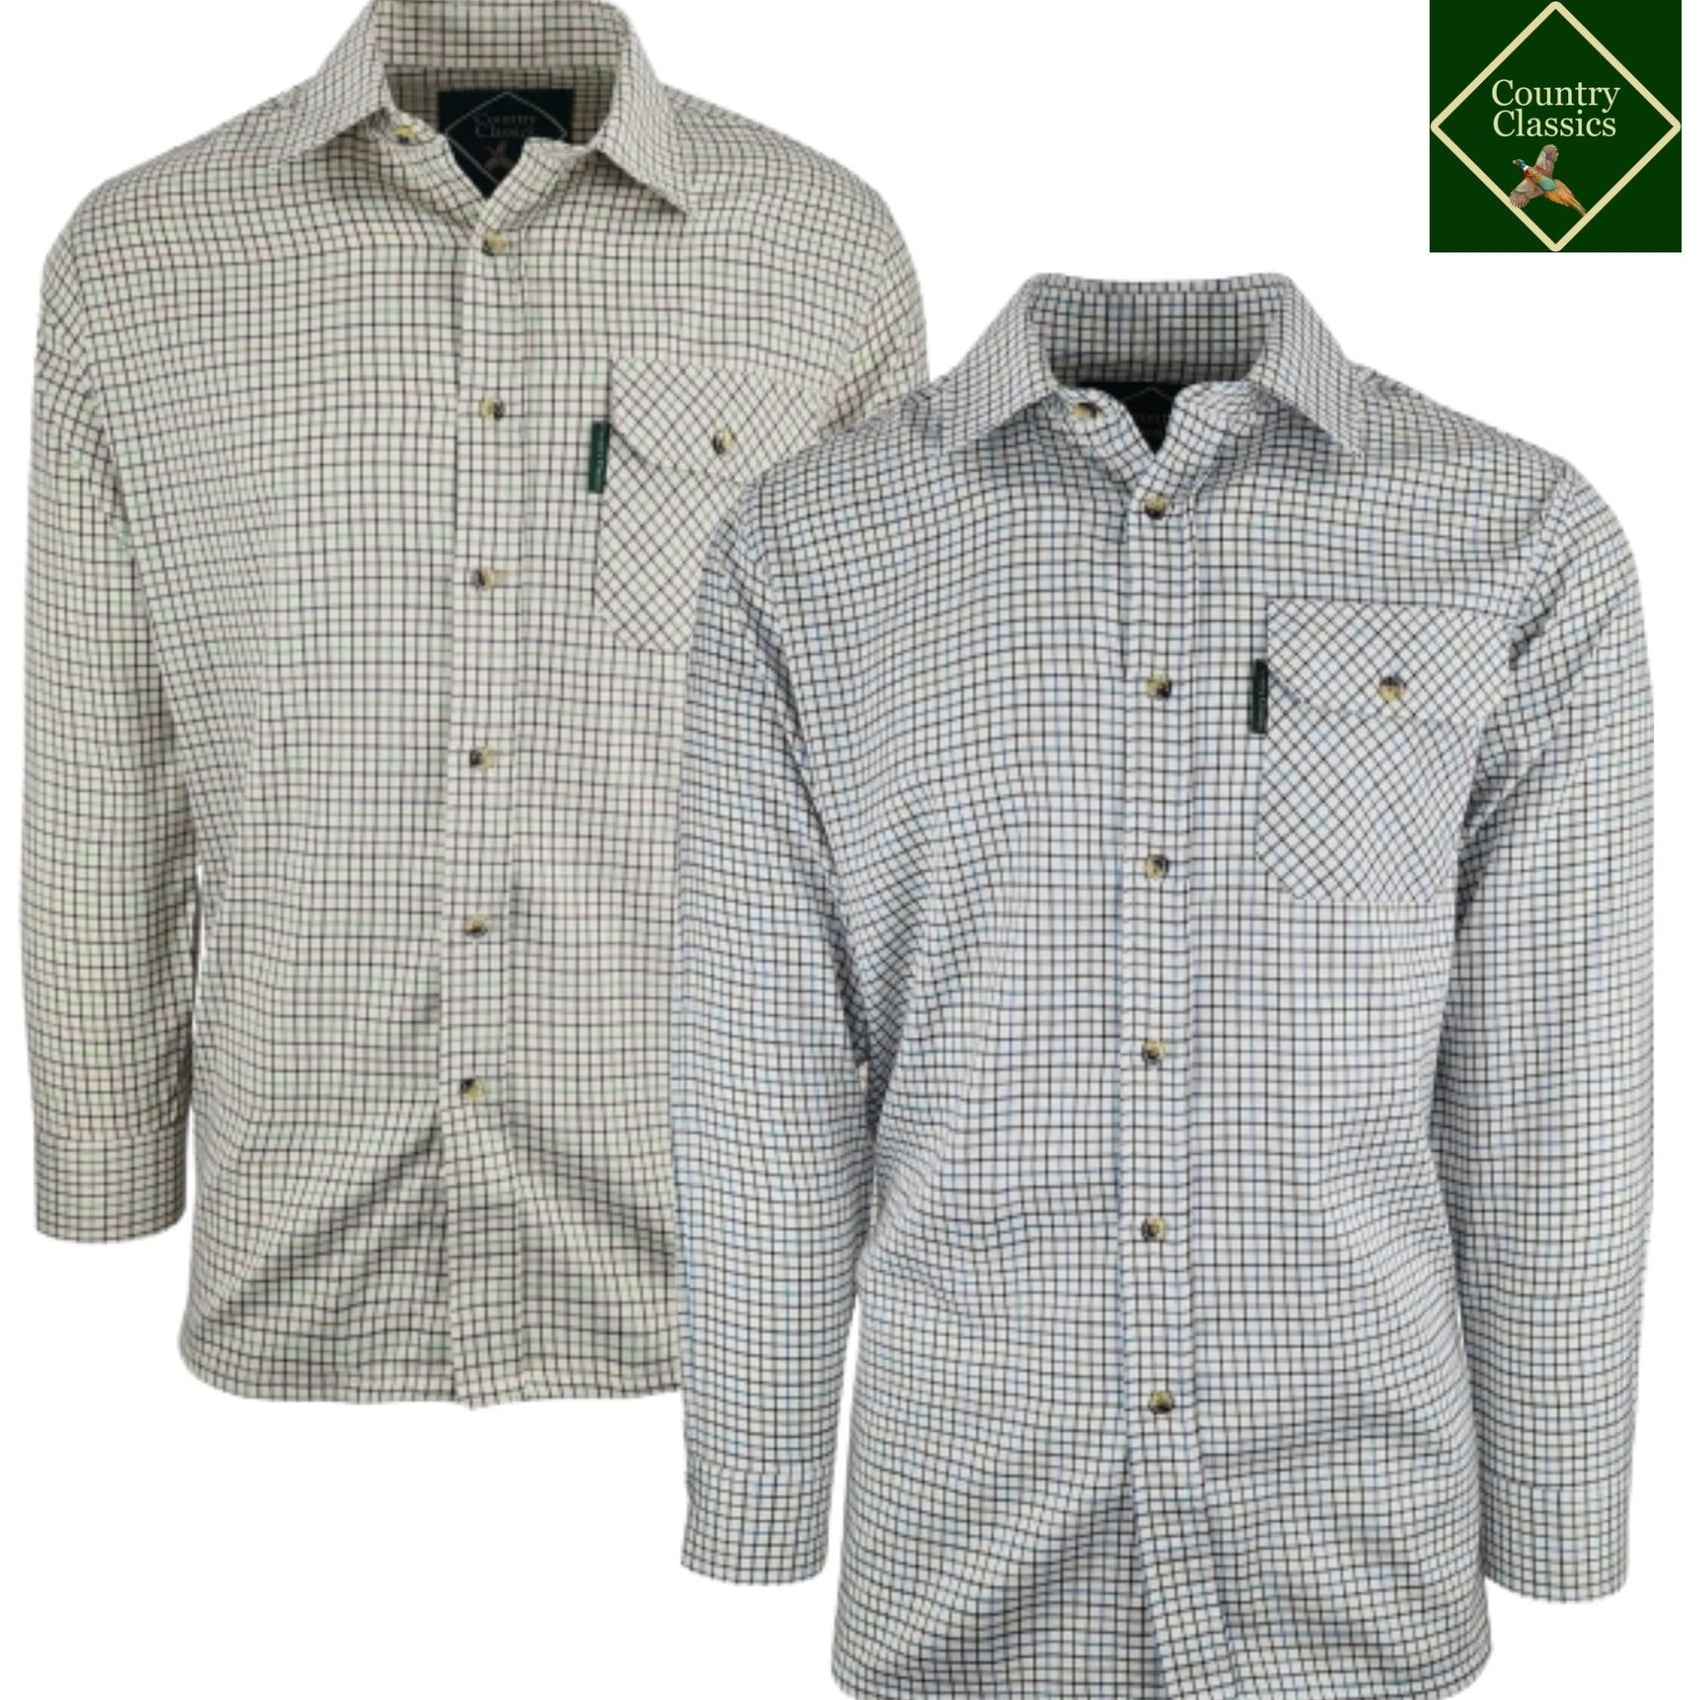 Country Classics Mens Long Sleeve Shirt - Epsom